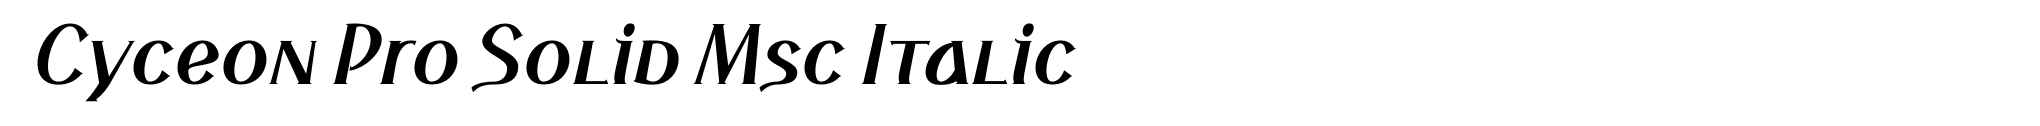 Cyceon Pro Solid Msc Italic image